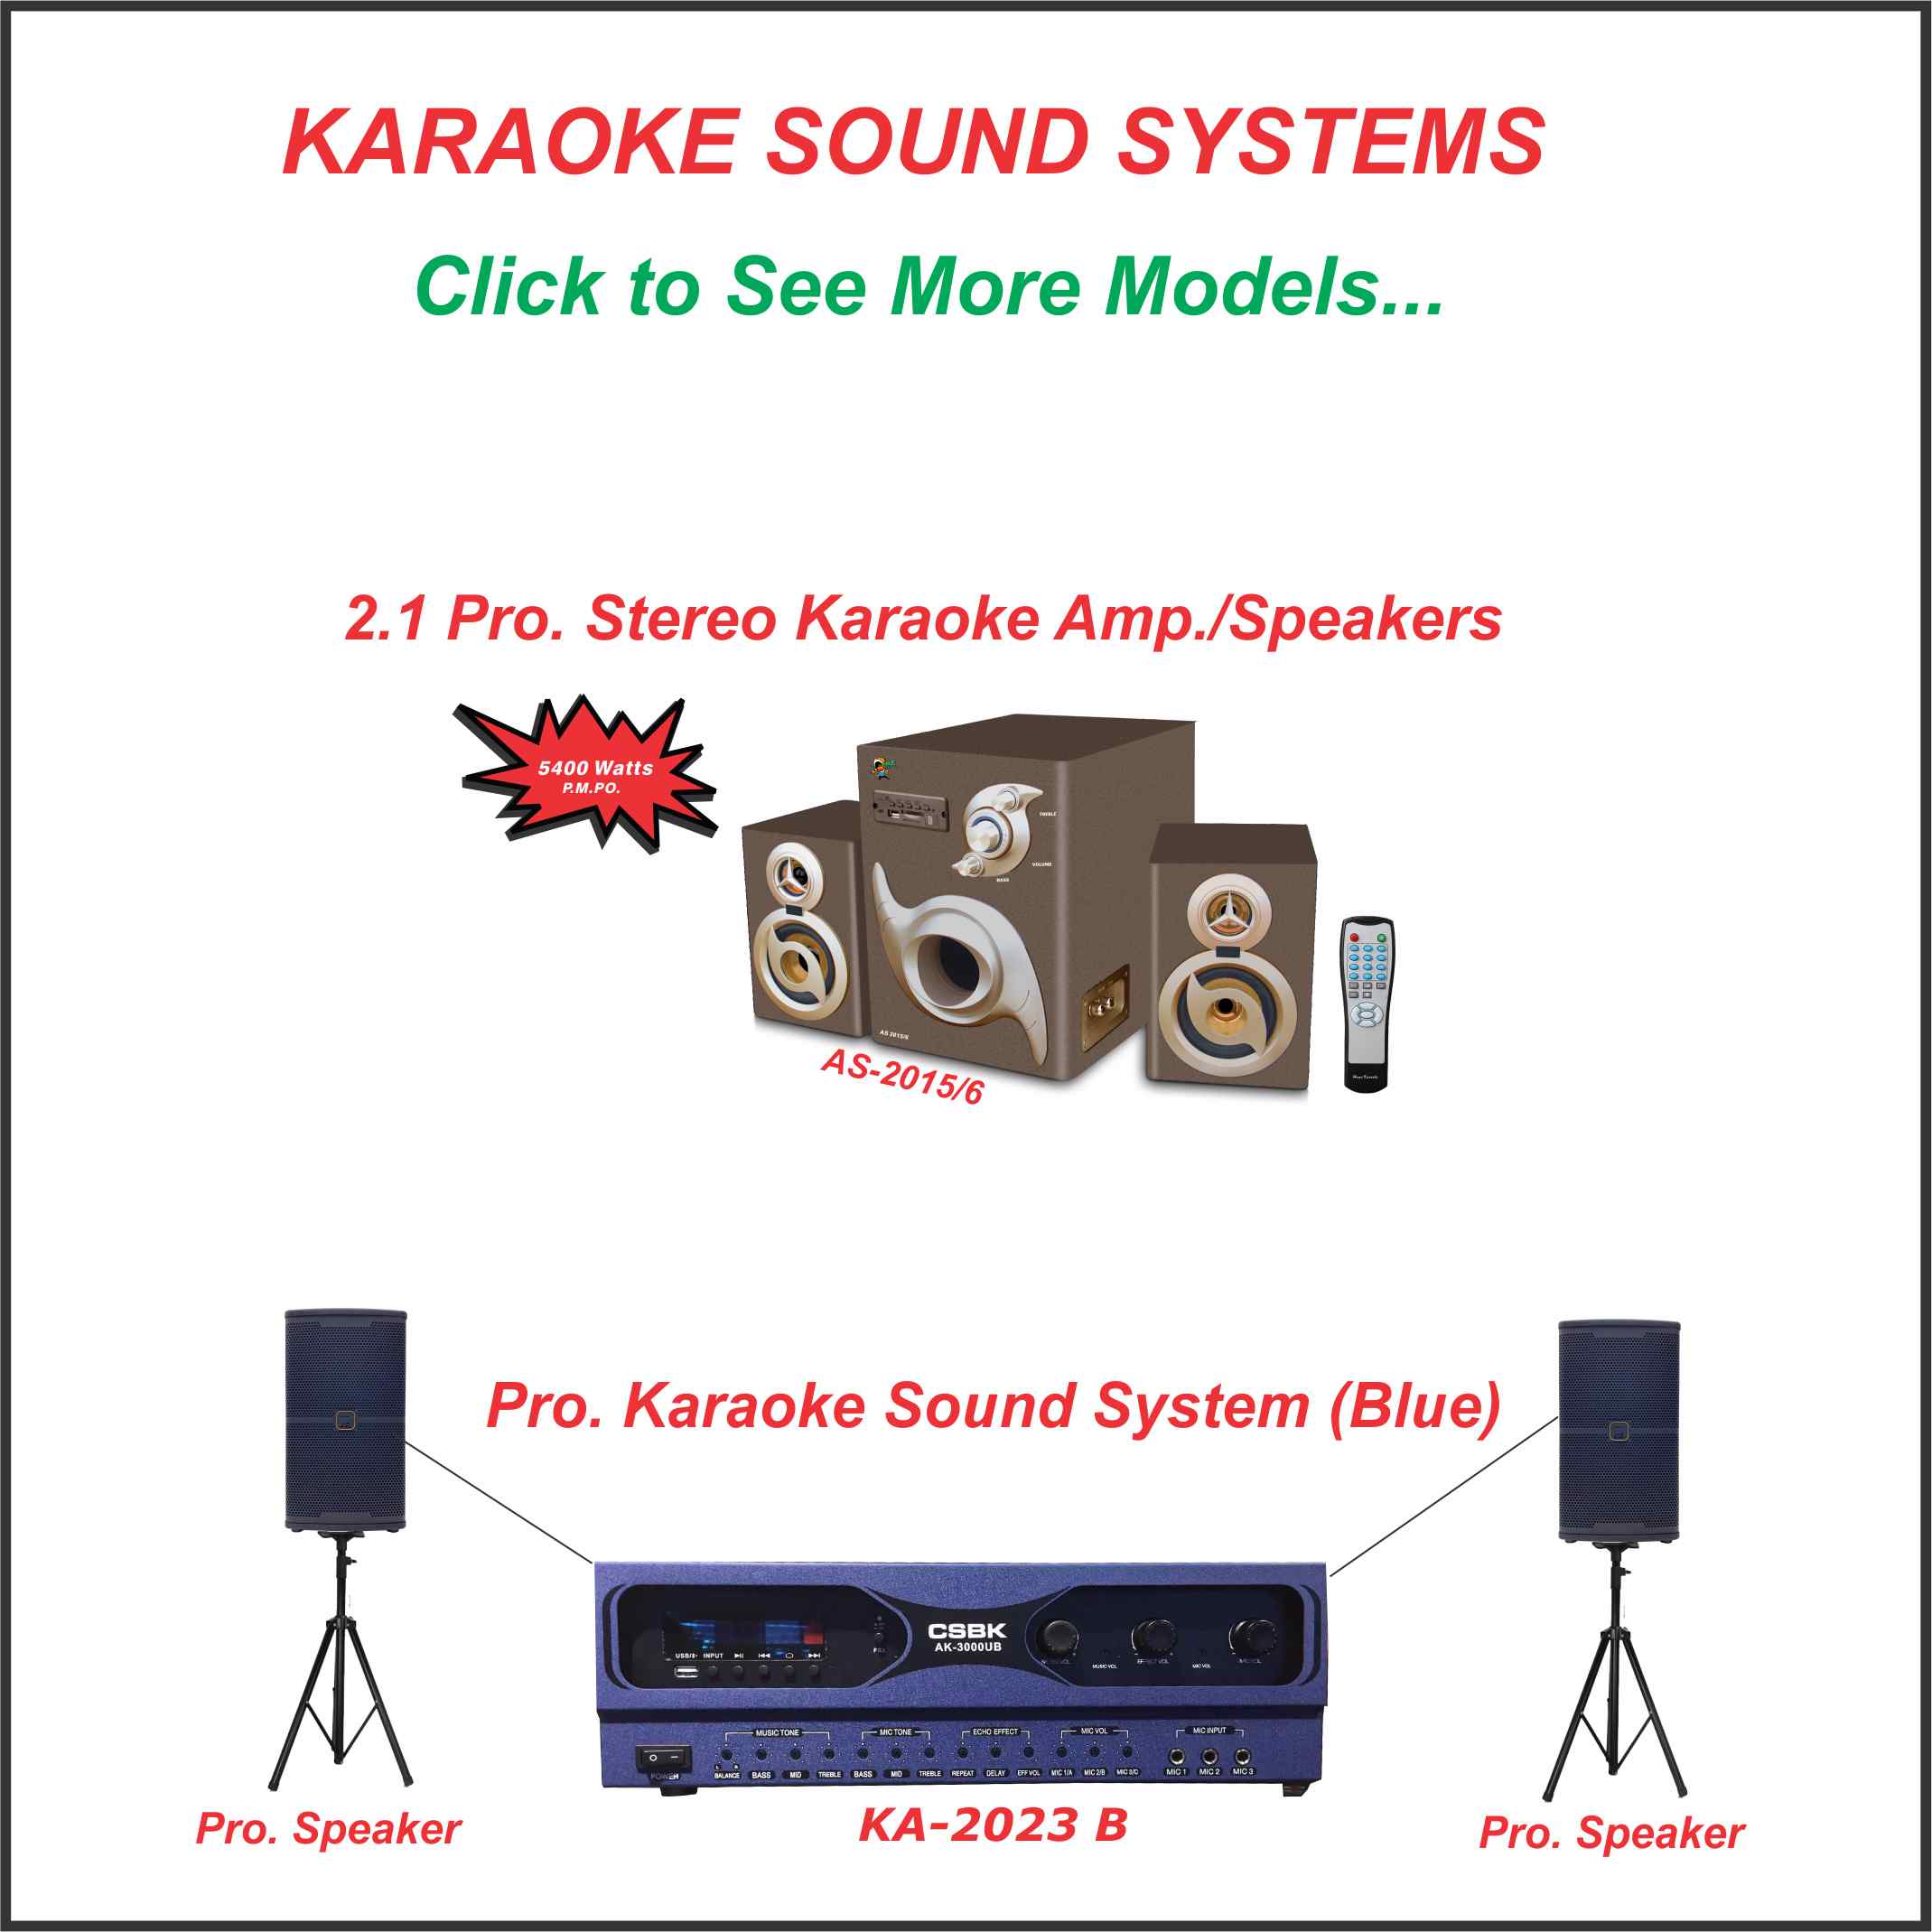 3. Karaoke Sound Systems